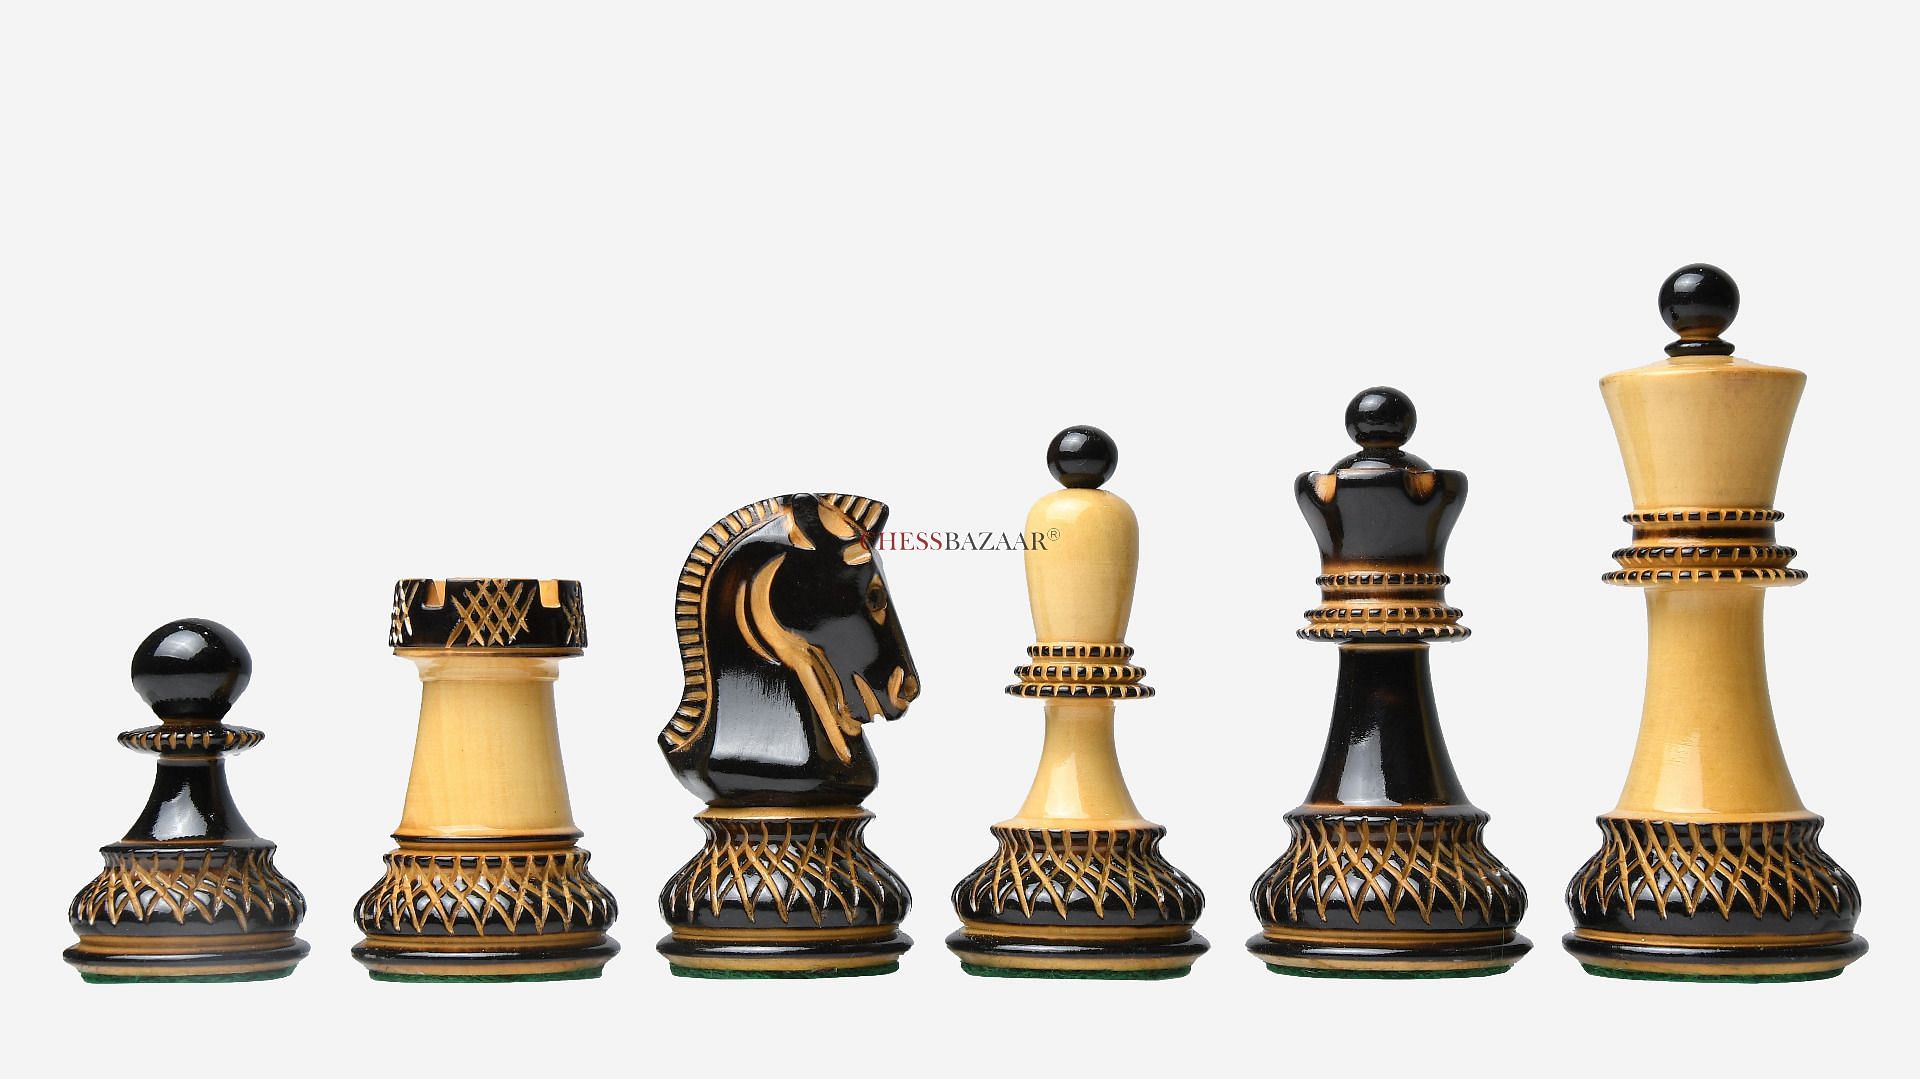 21 Bobby Fischer Ultimate Metal Luxury Storage Chess Set